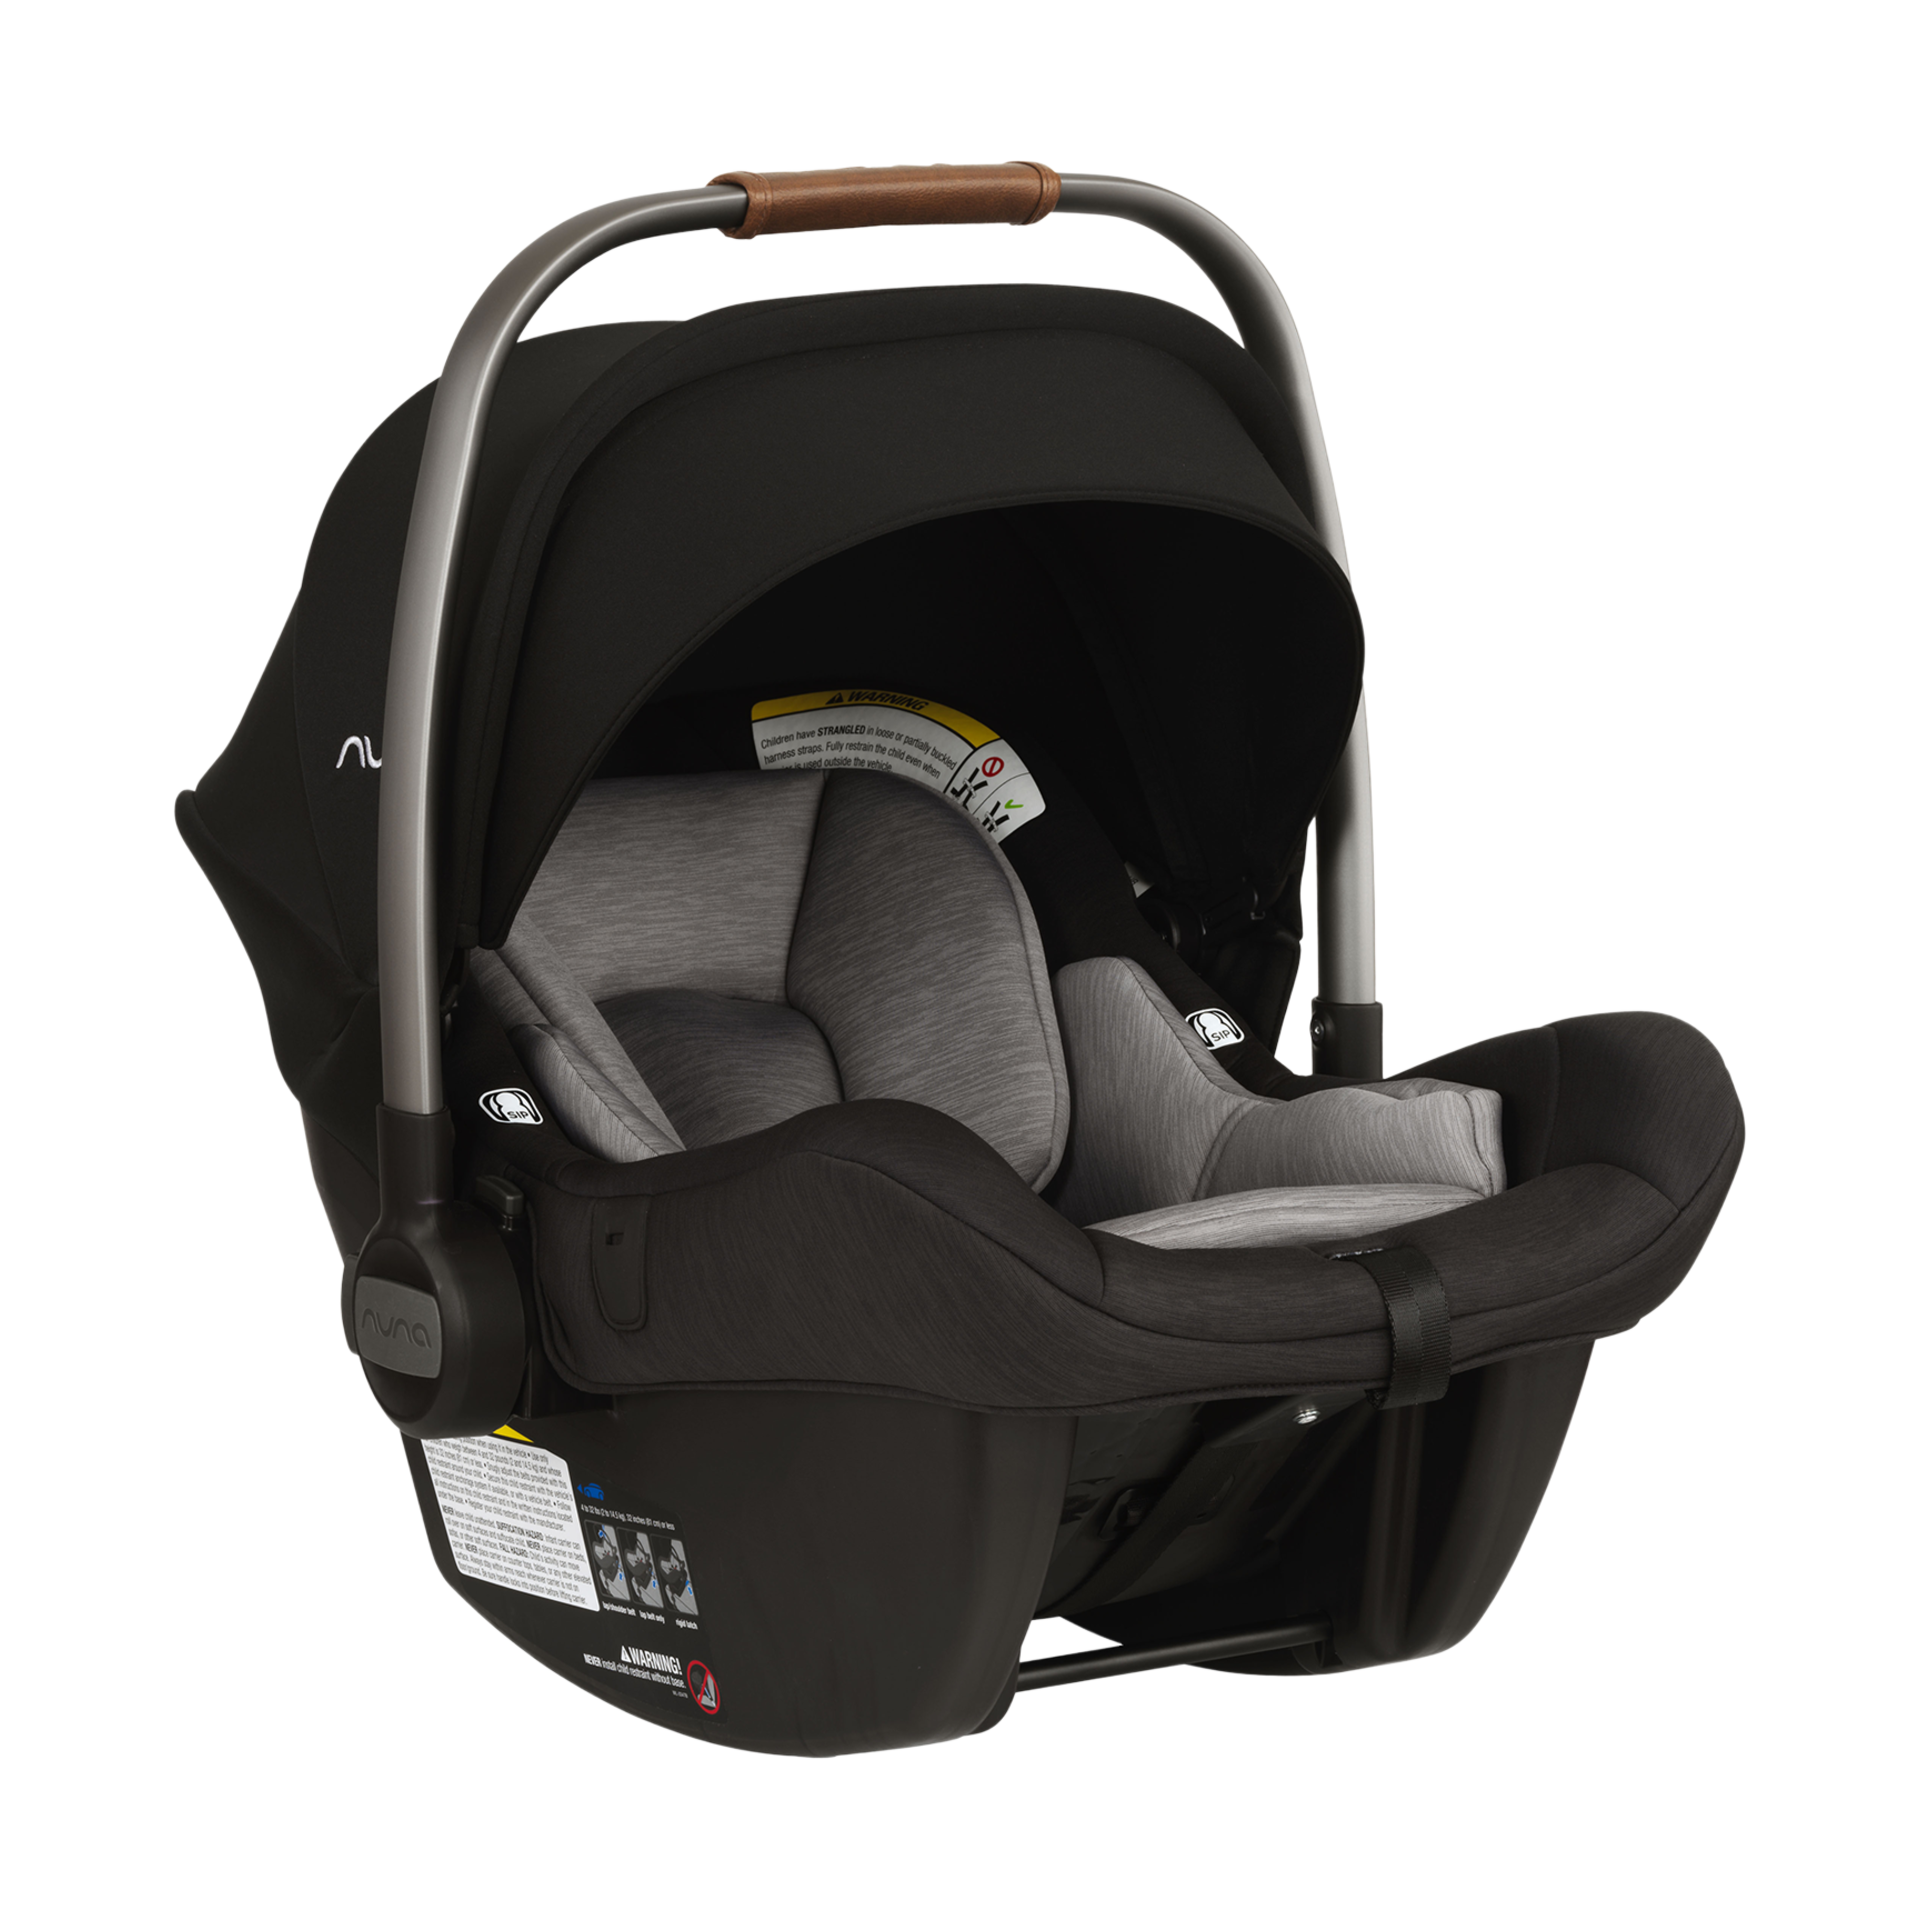 nuna pipa infant car seat